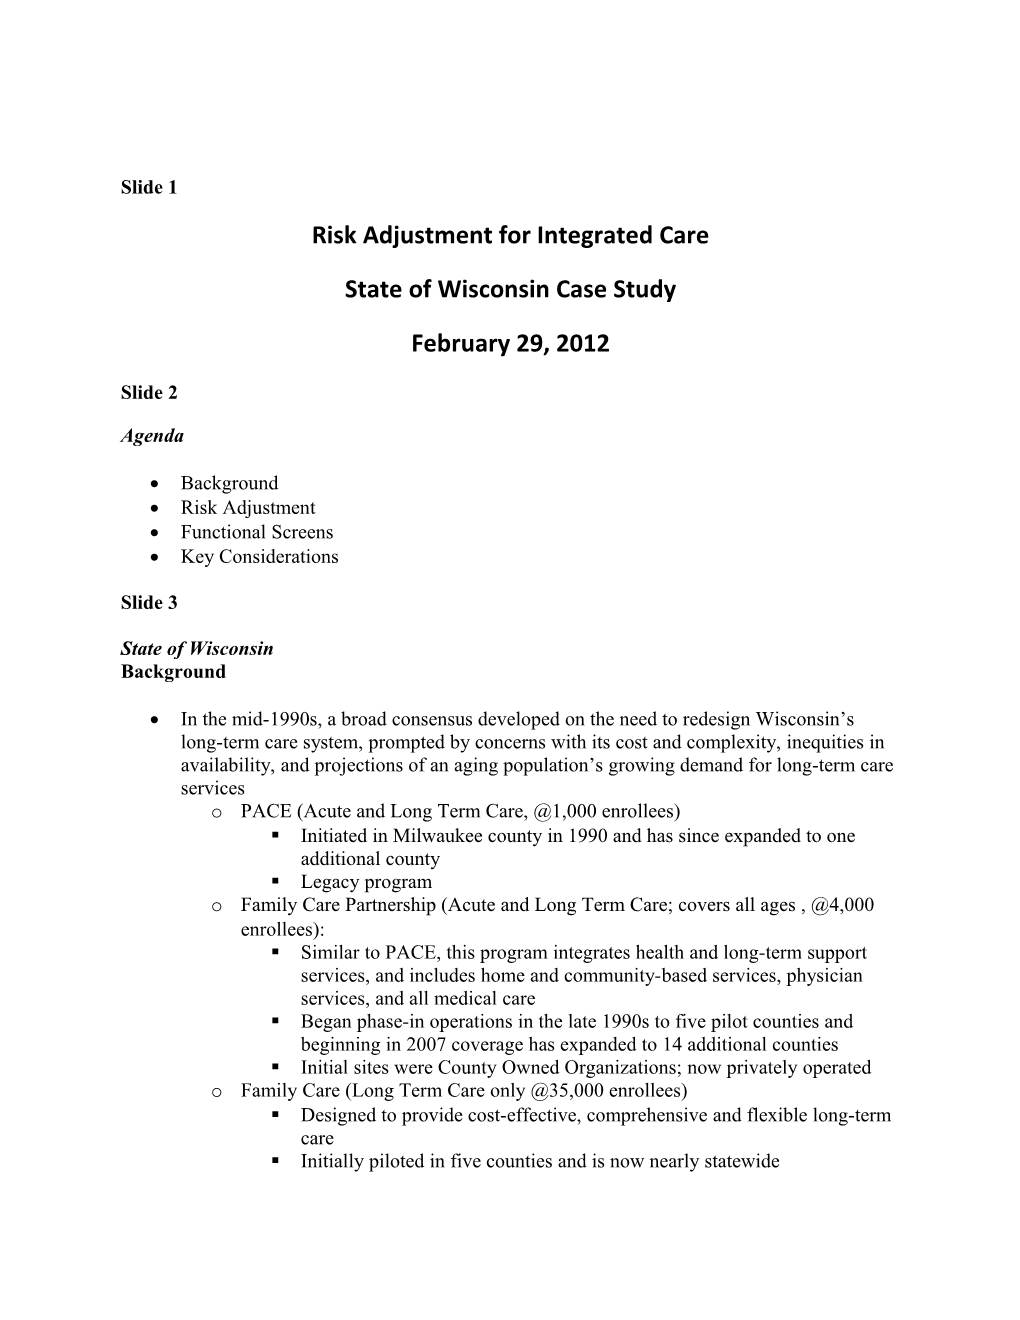 Risk Adjustment for Integrated Care